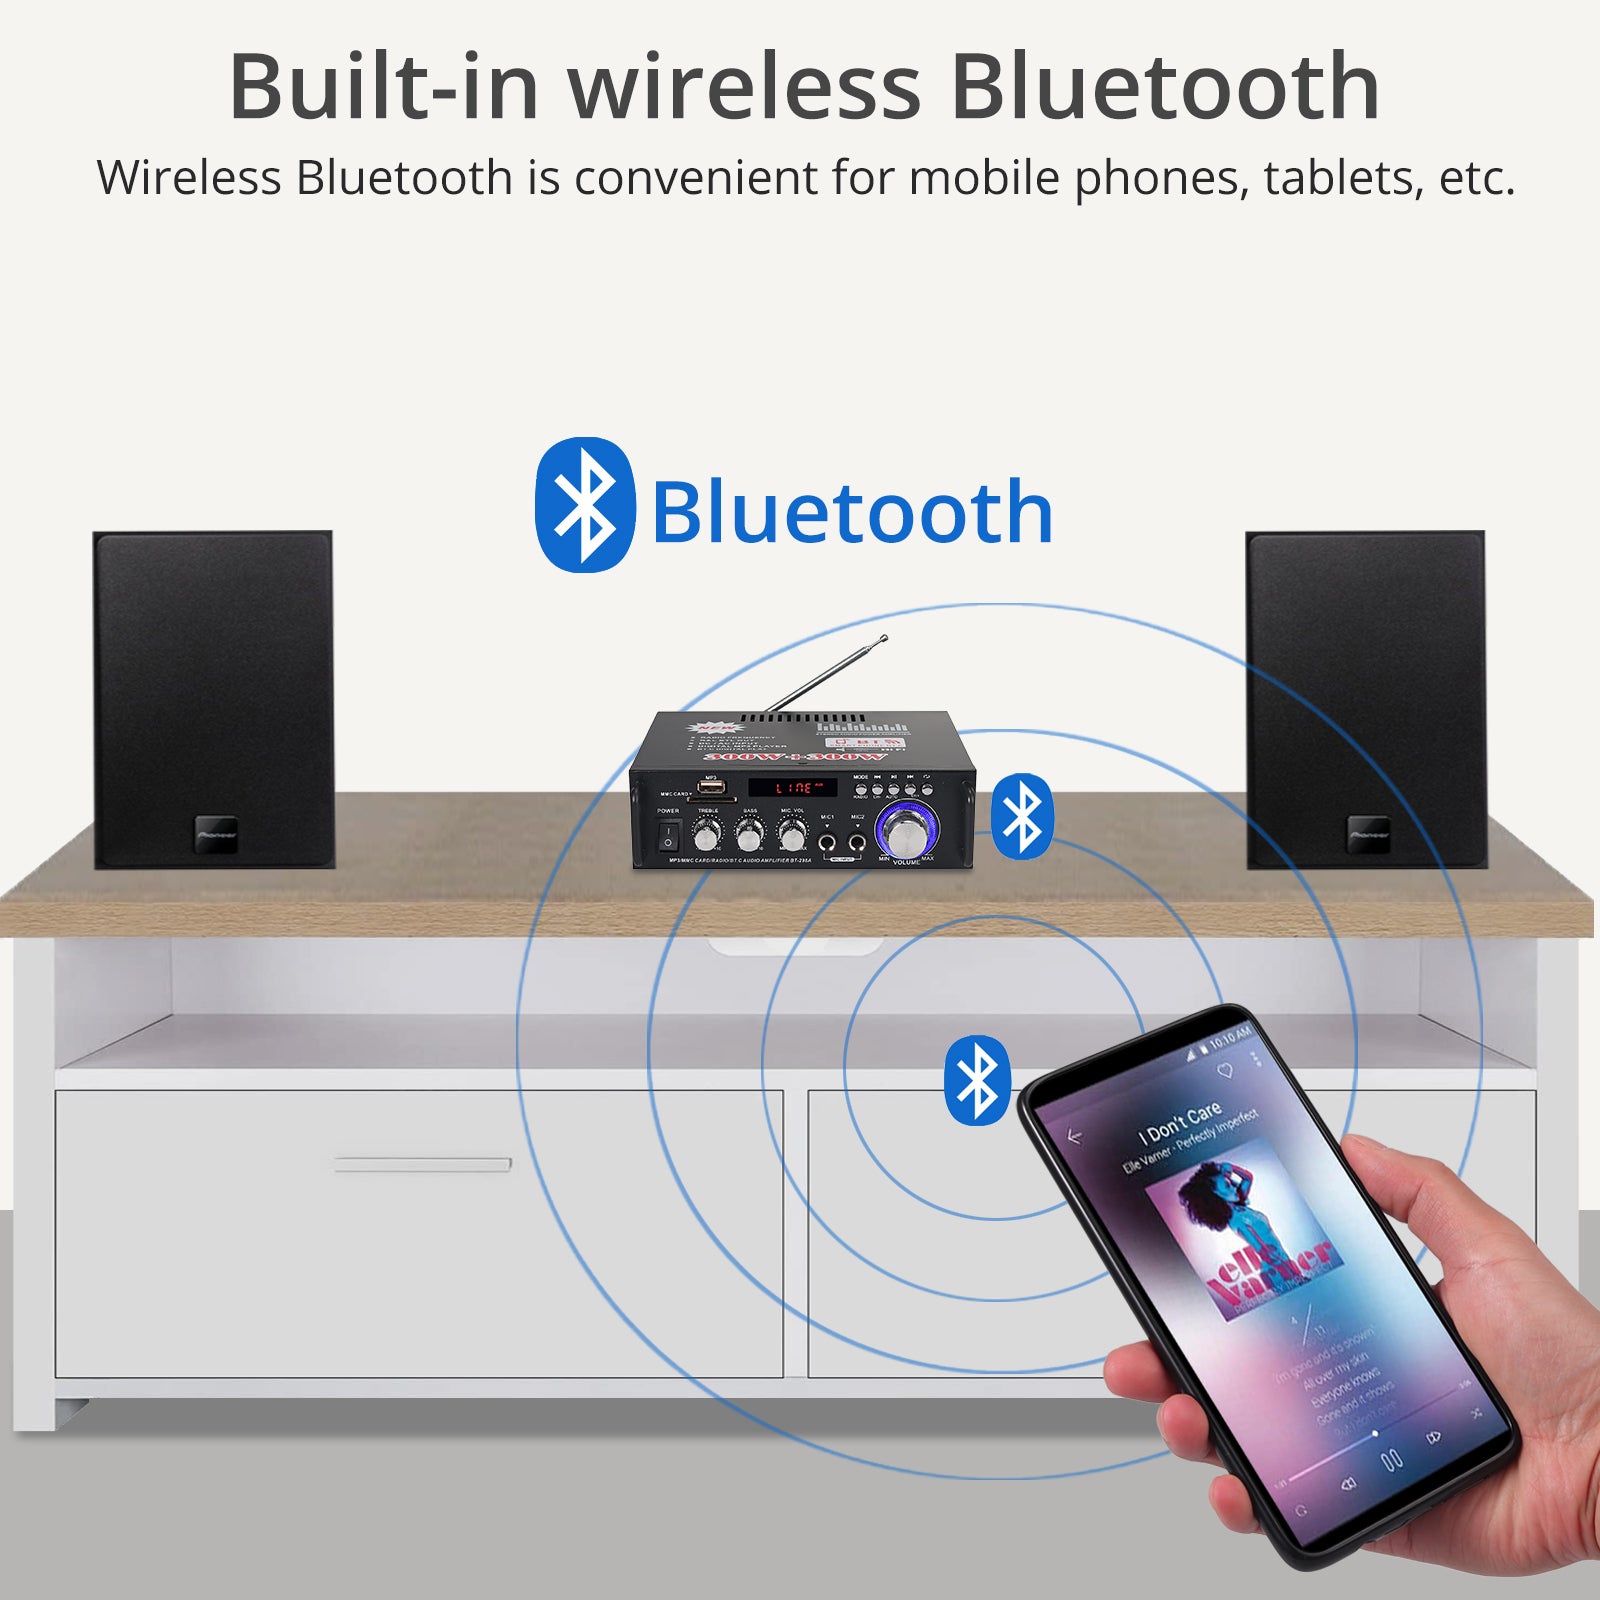 PROZOR Bluetooth Stereo Audio Amplifier 300 W + 300 W Audio Amplifier Mini Digital Audio Amplifier HiFi Music SD USB FM 12 V/220 V with IR Remote Control